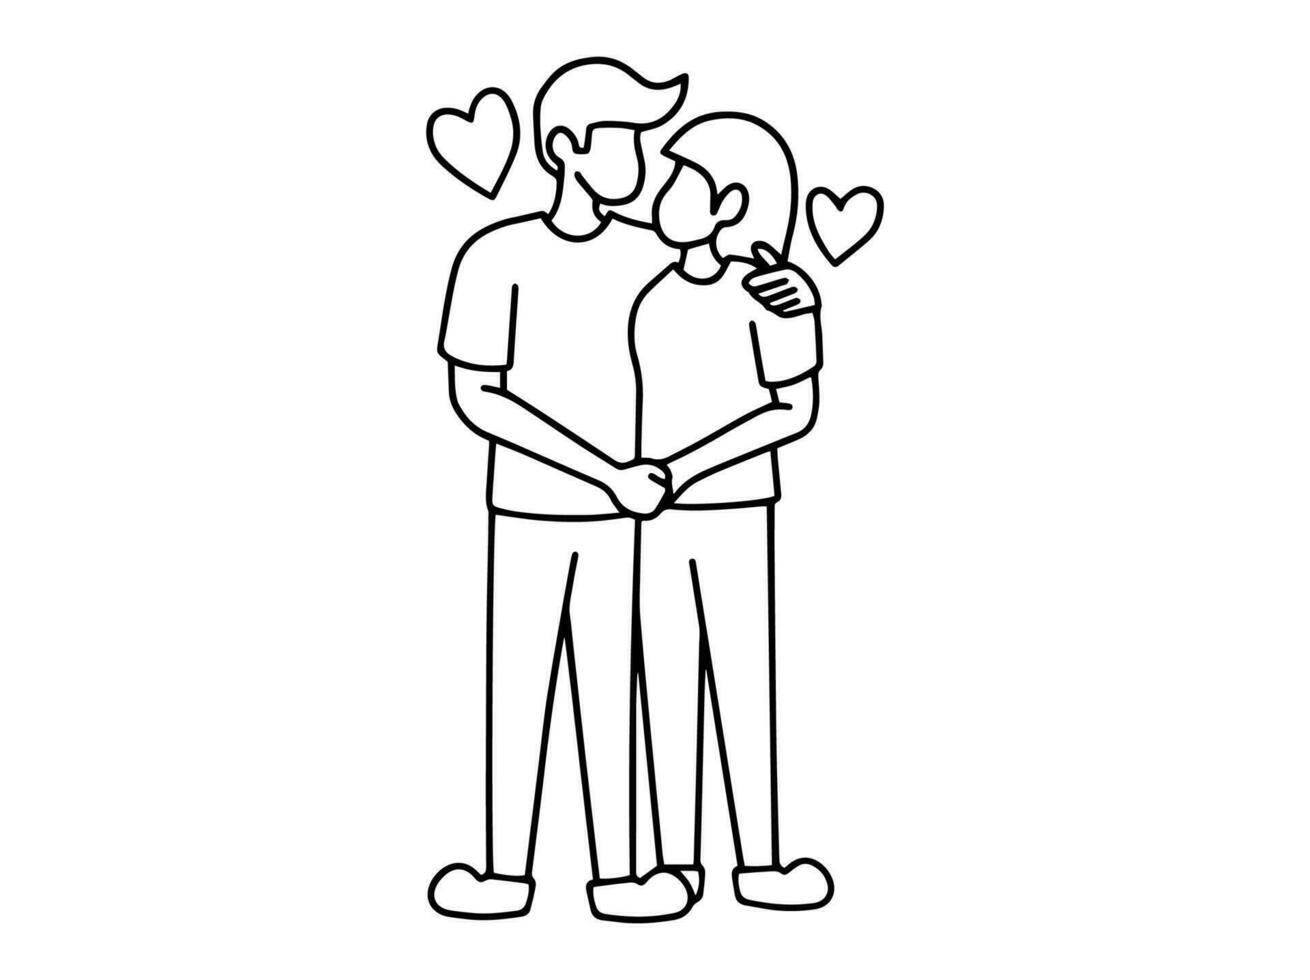 Romantic Couple Line art Illustration vector